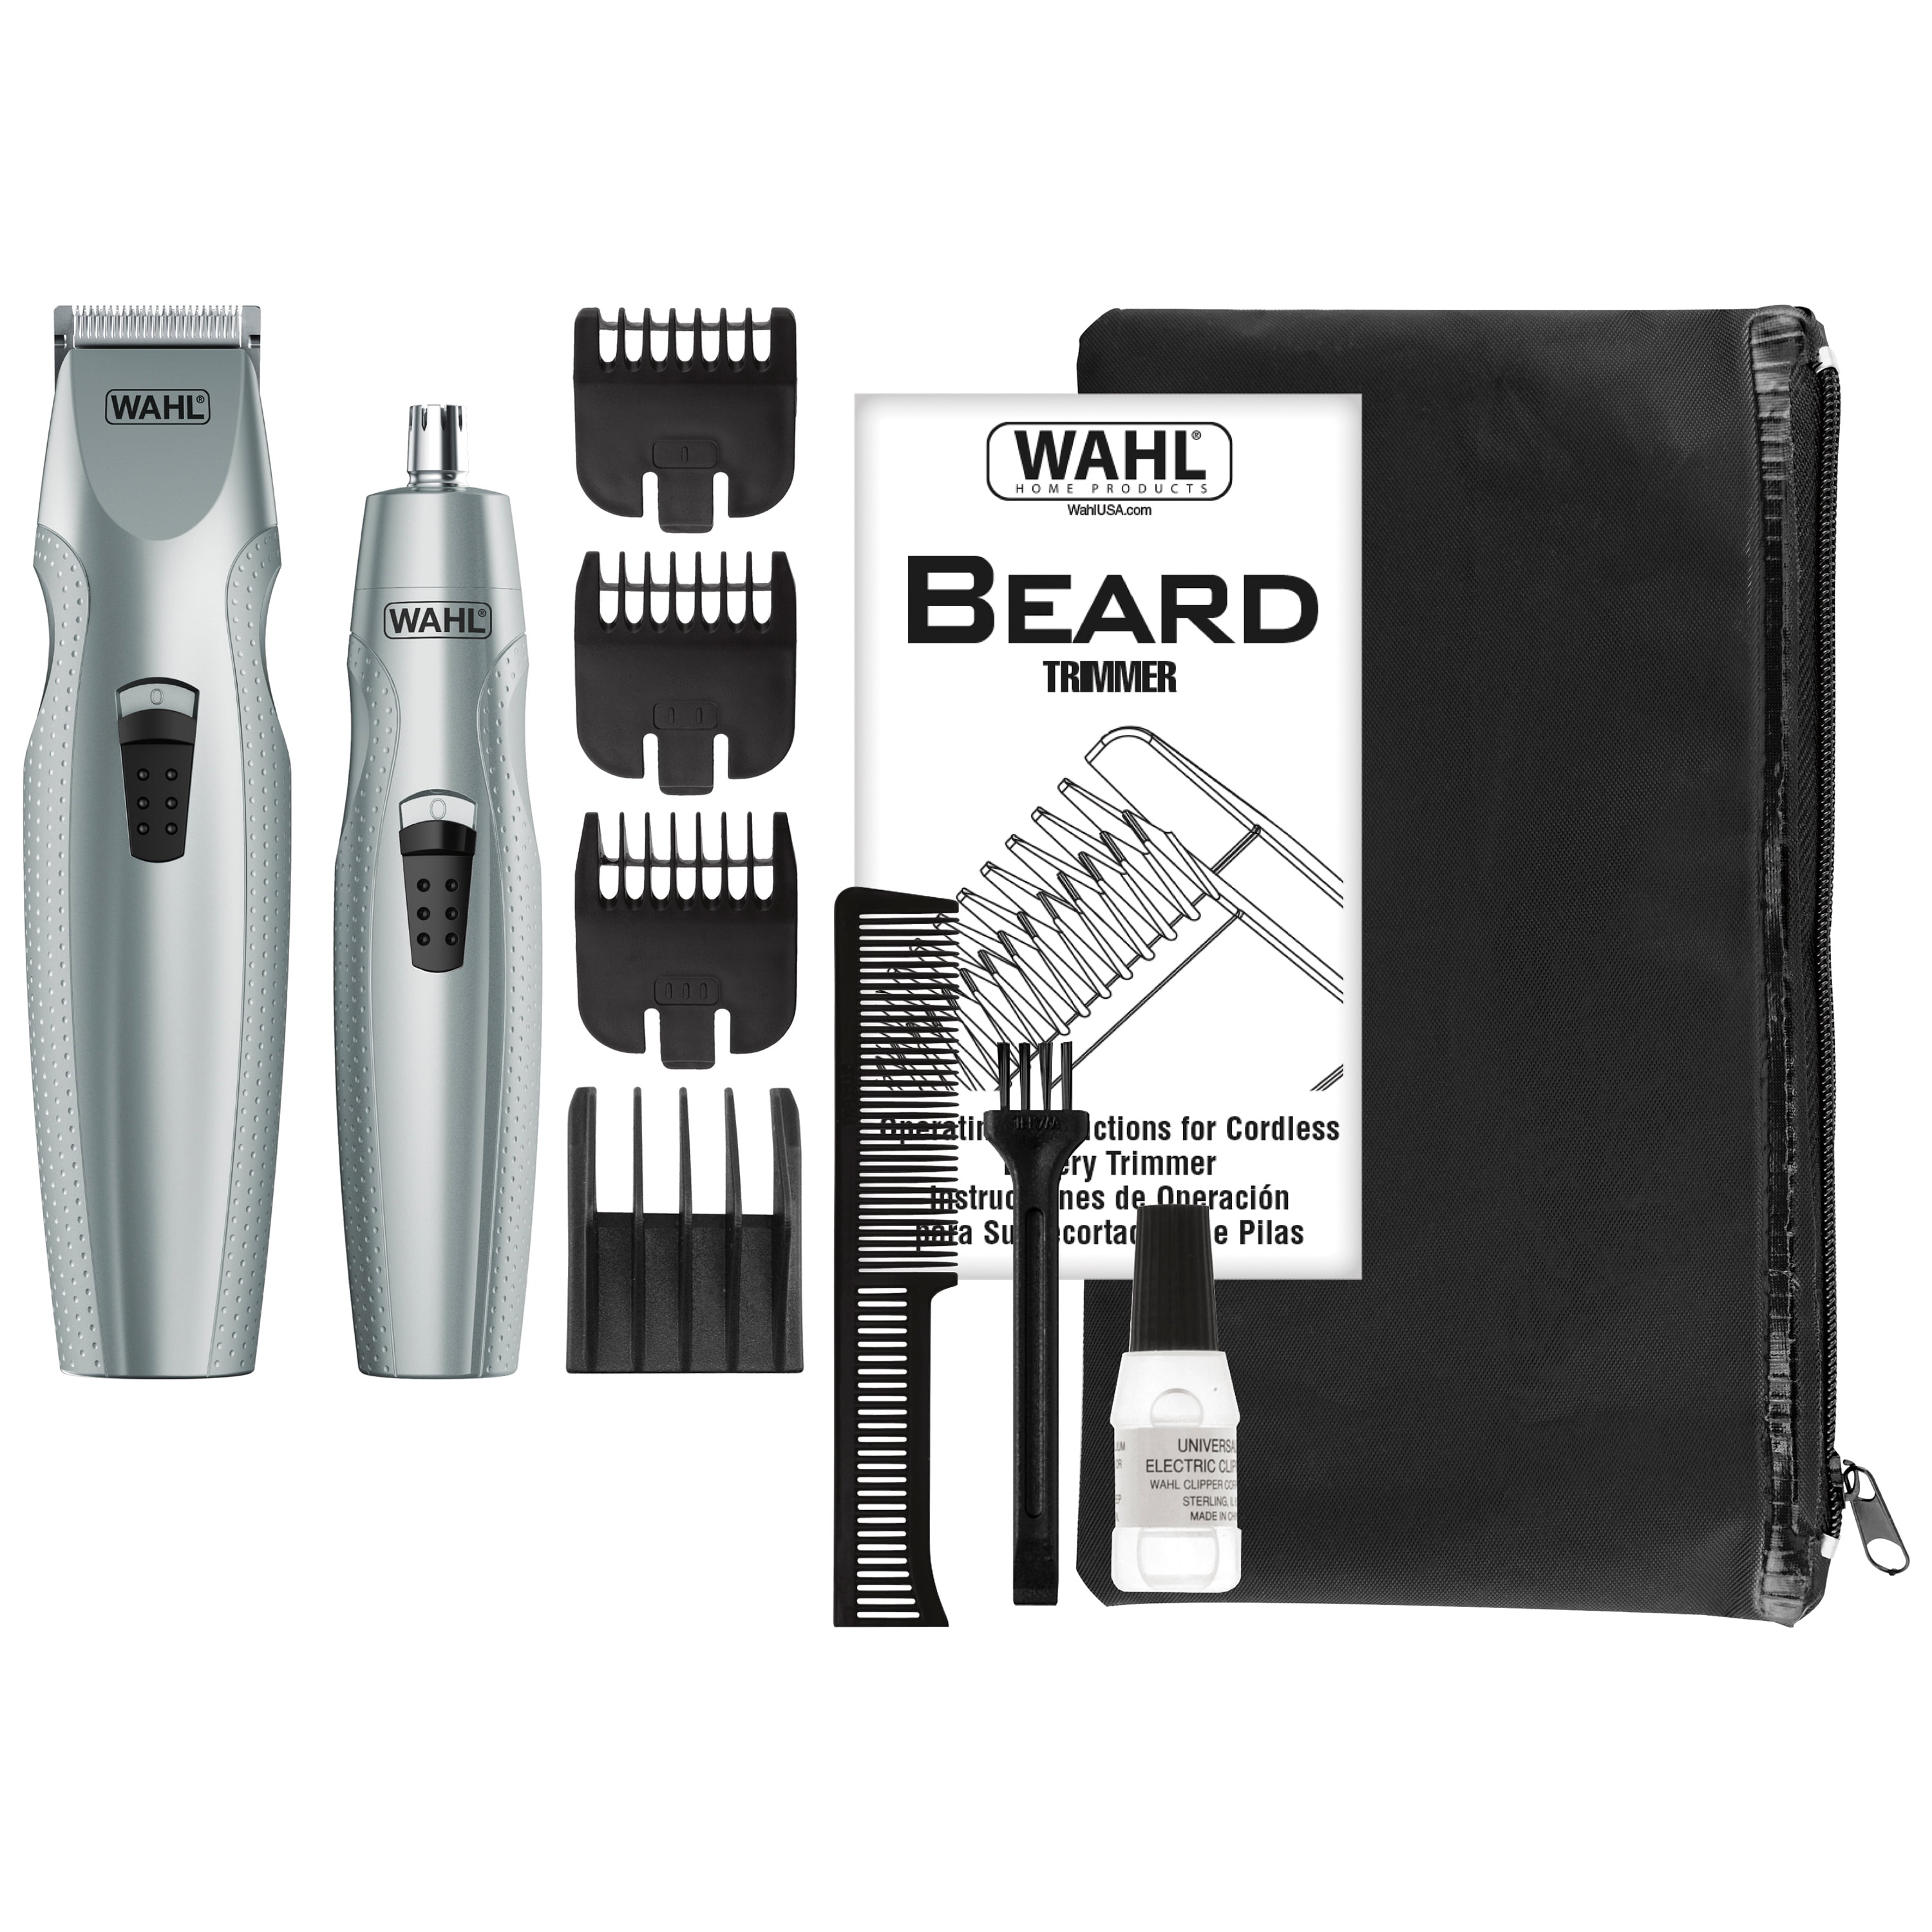 & Mustache Nose Bonus Trimmer Battery Beard With Model Trimmer Kit Wahl #5606-5601P